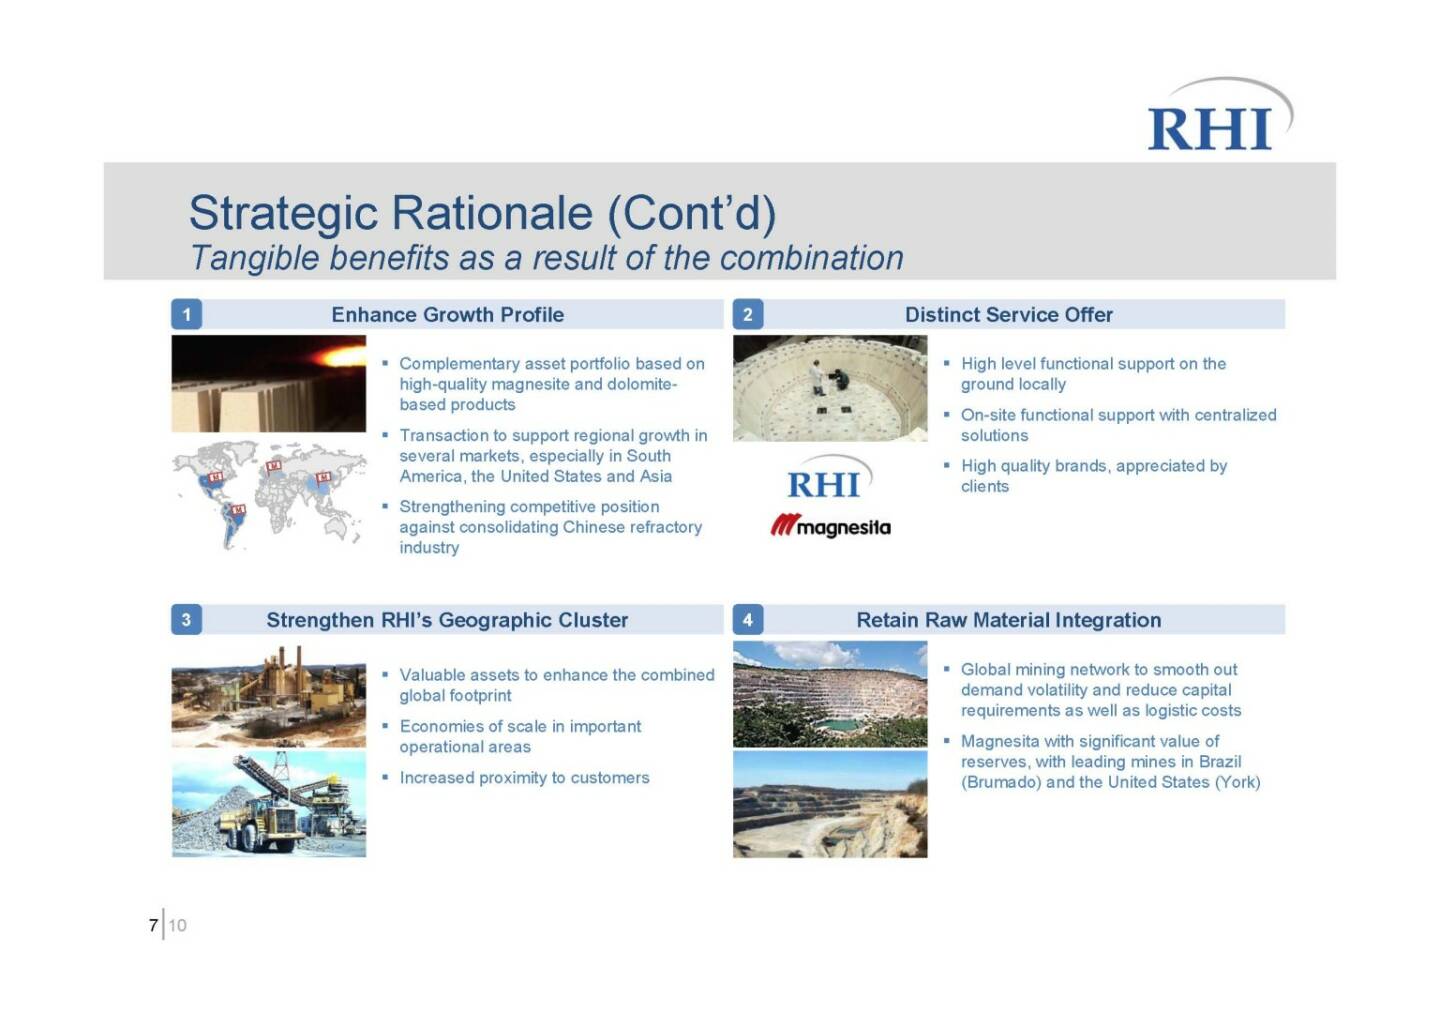 RHI - Strategic Rationale (Cont’d)